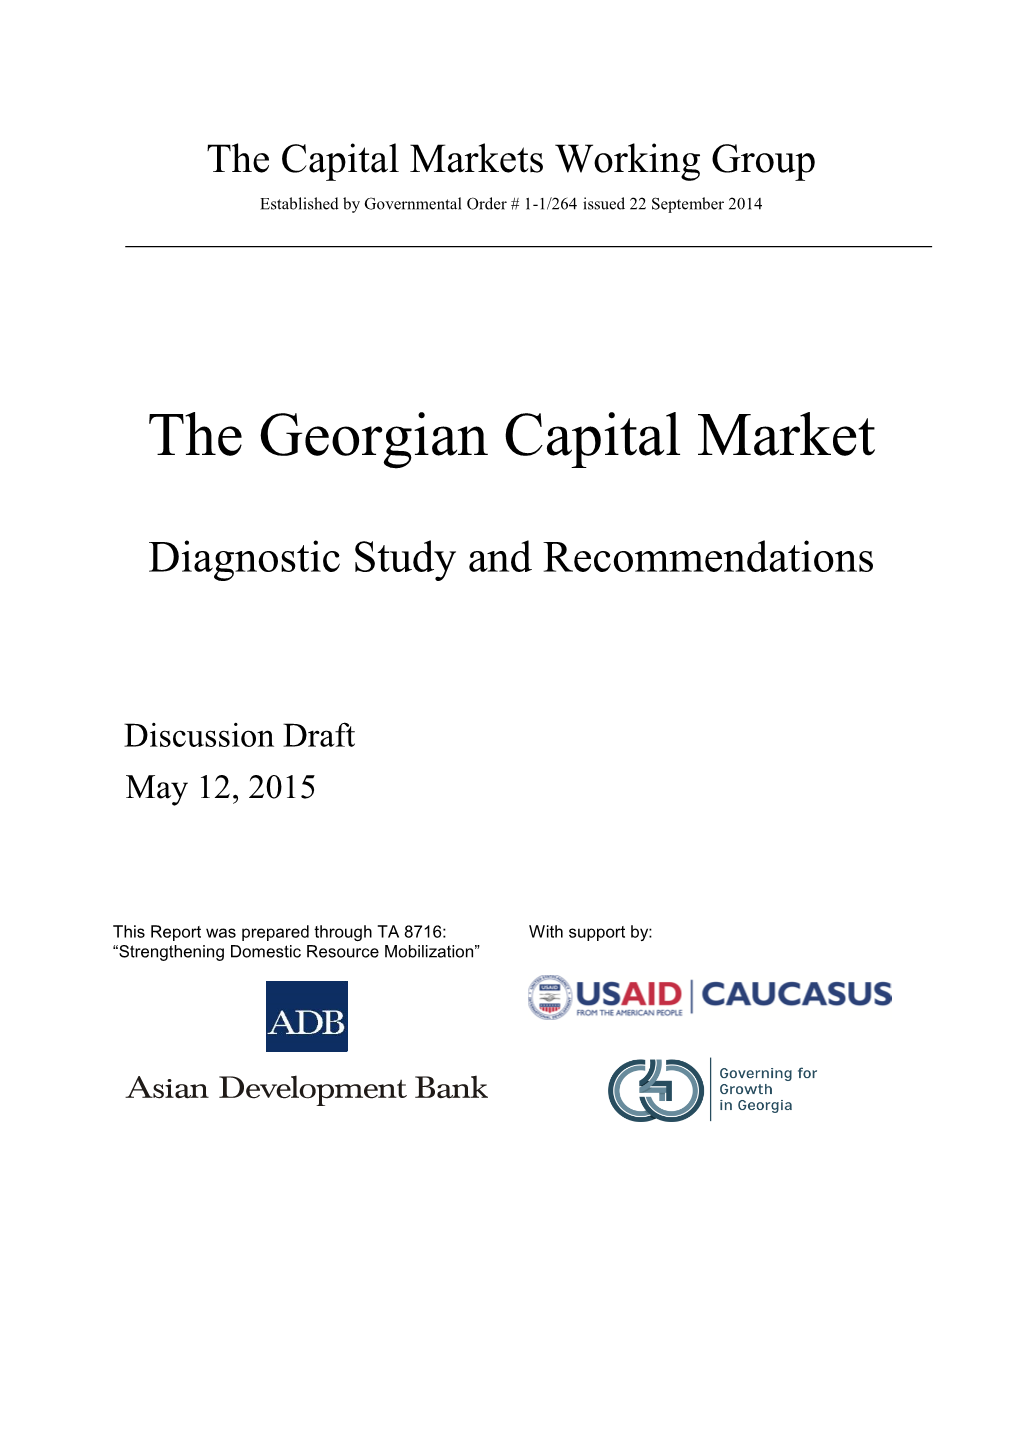 The Georgian Capital Market